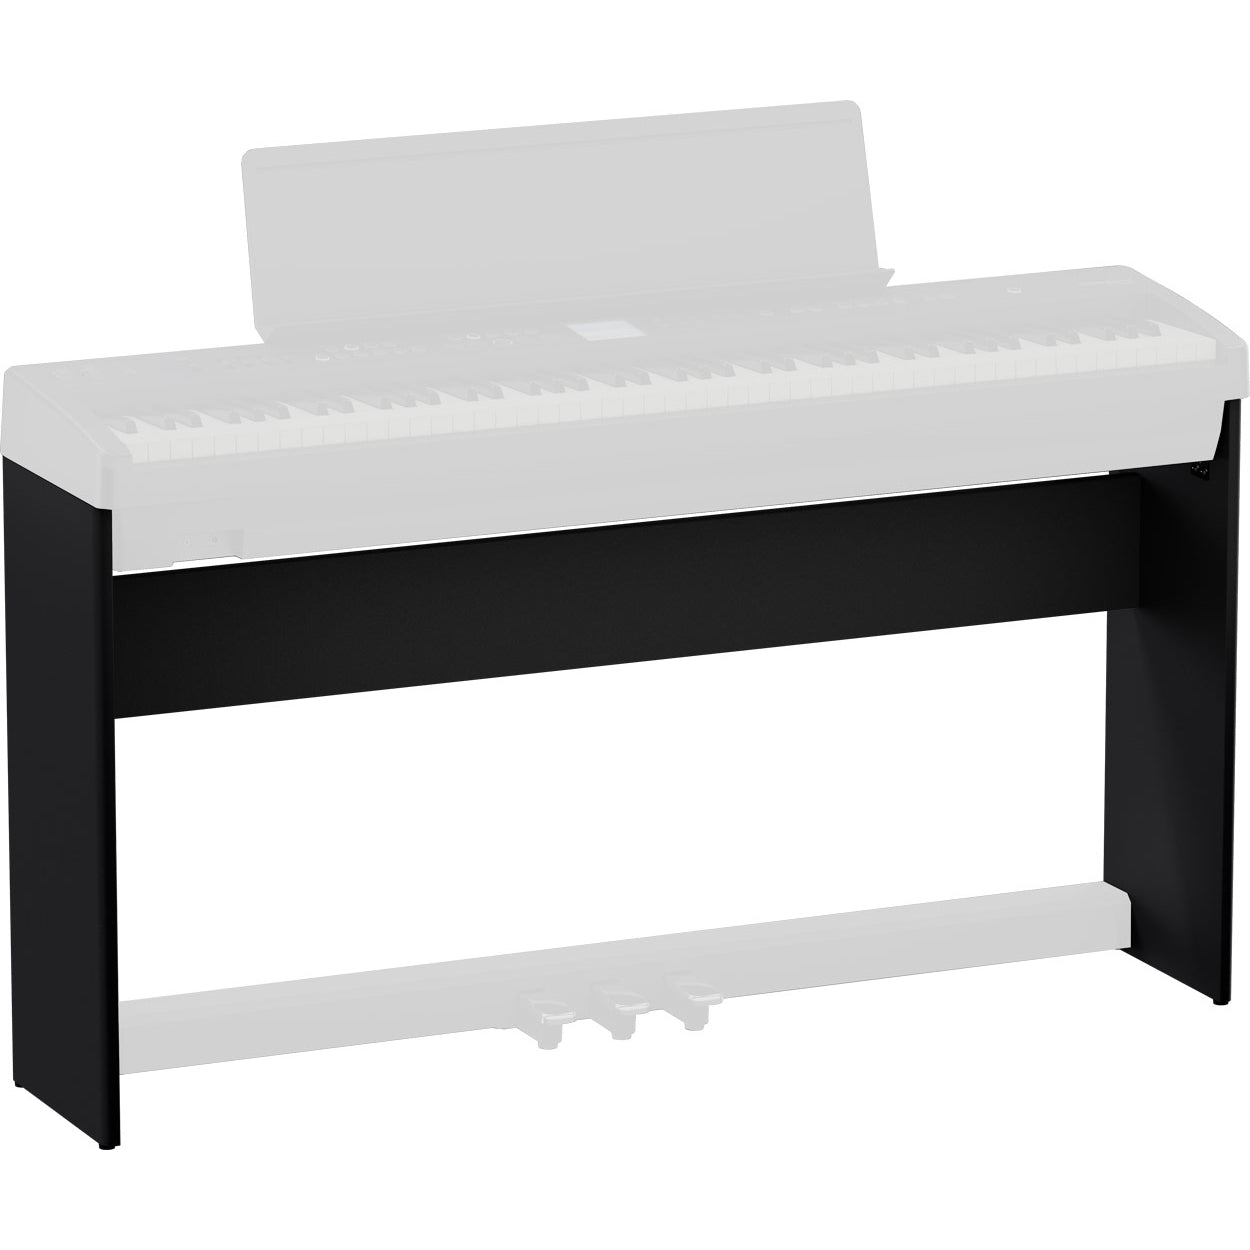 Roland KSFE50-BK Digital Piano Stand Black For FP-E50